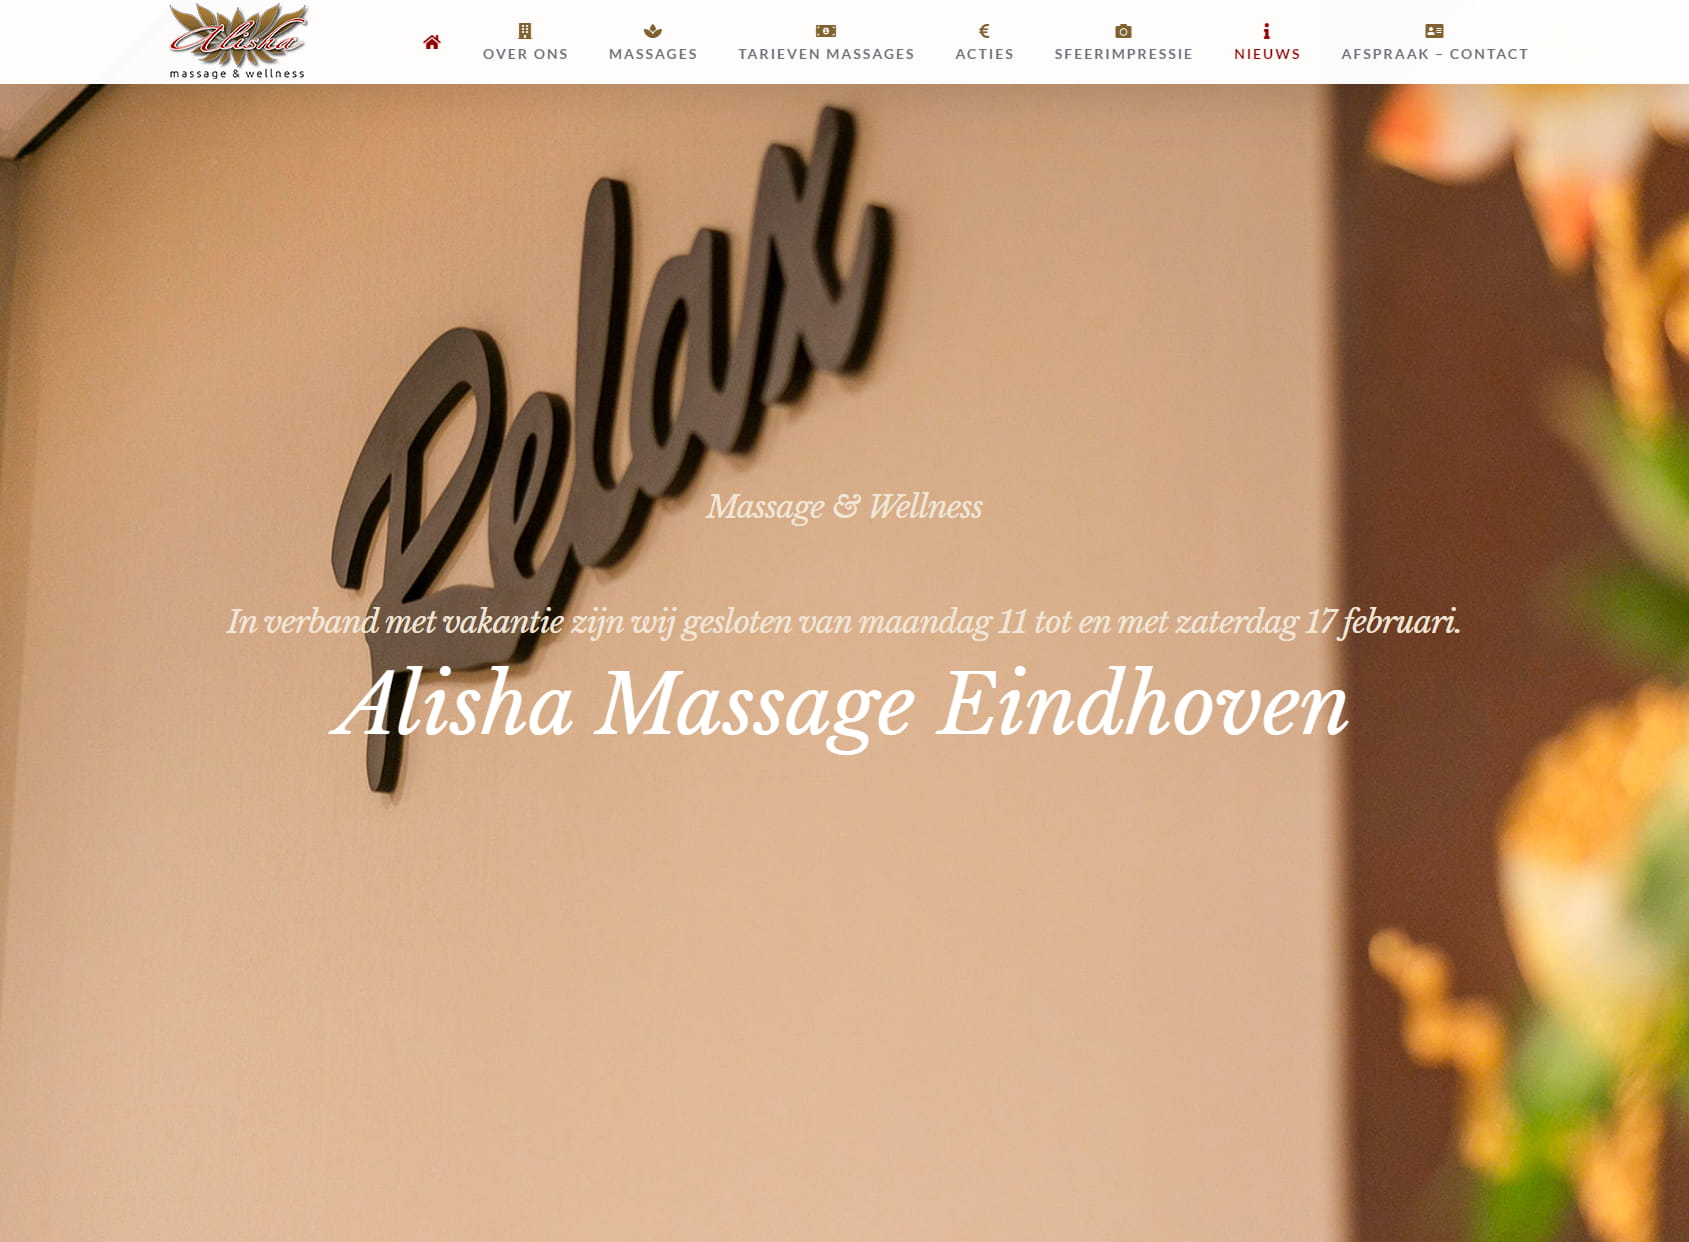 Alisha Massage en Wellness